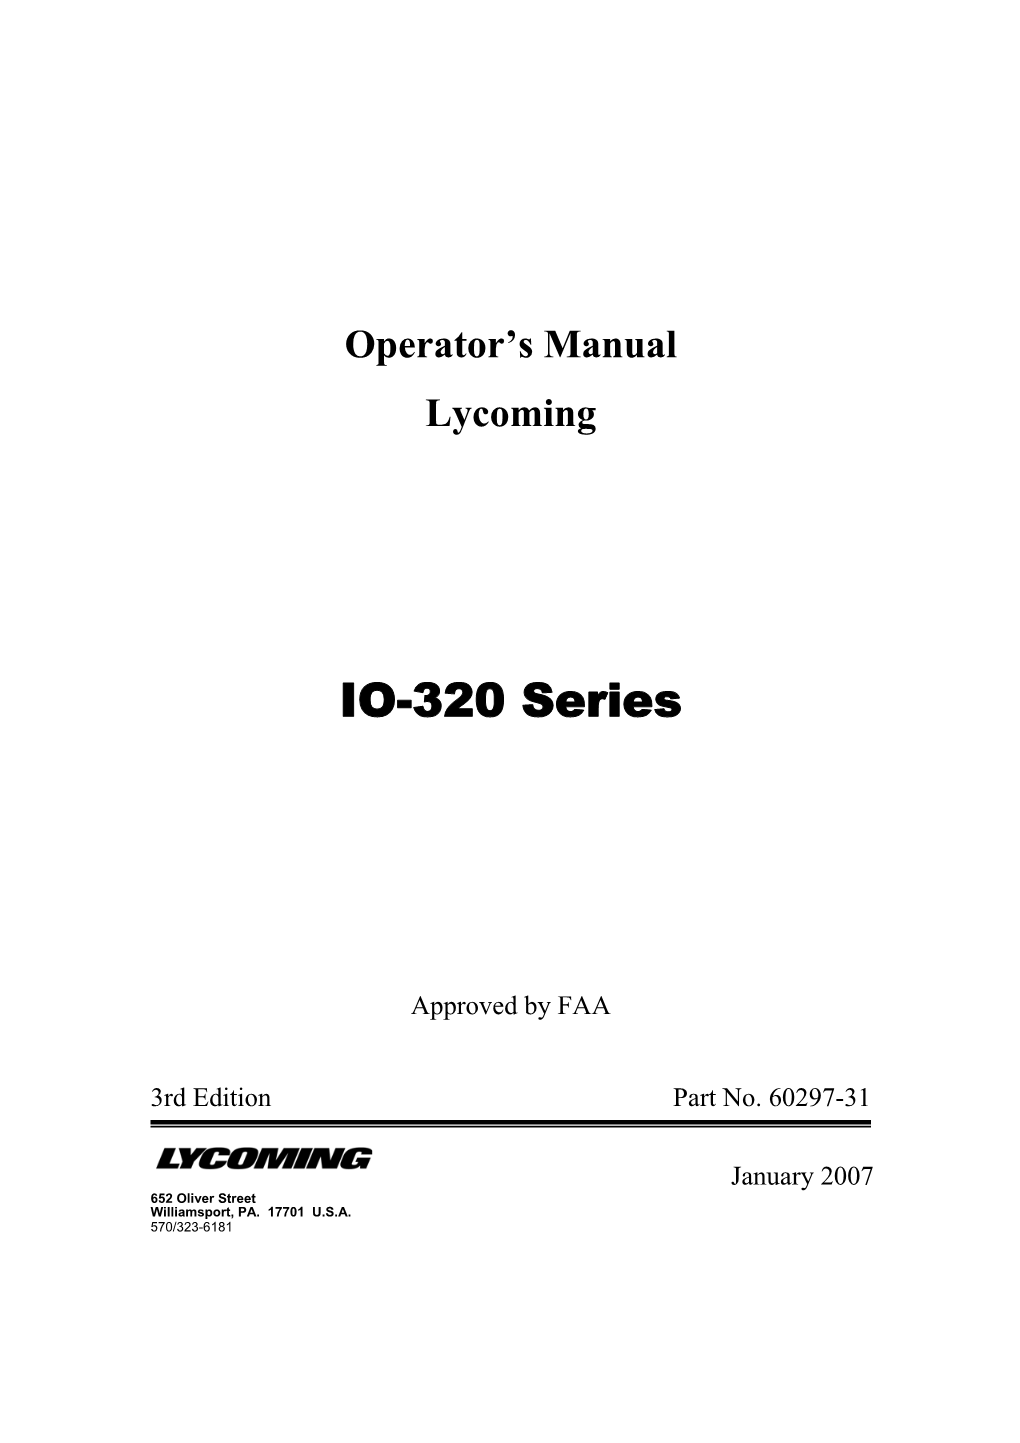 Lycoming IO-320 Operators Manual